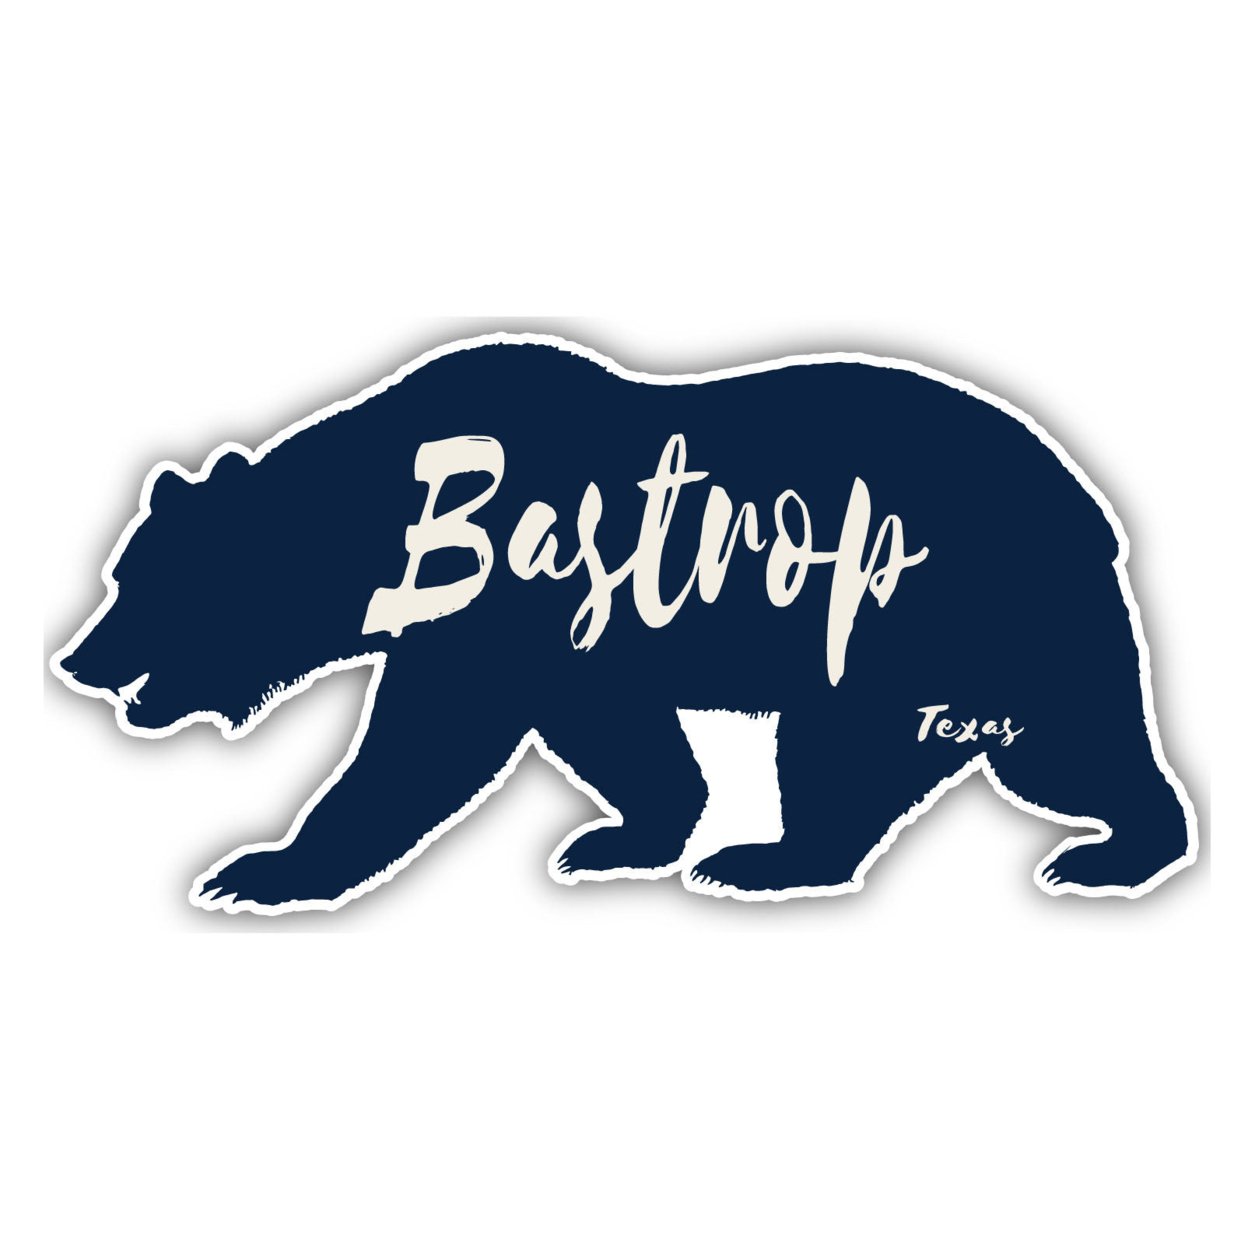 Bastrop Texas Souvenir Decorative Stickers (Choose Theme And Size) - Single Unit, 2-Inch, Bear